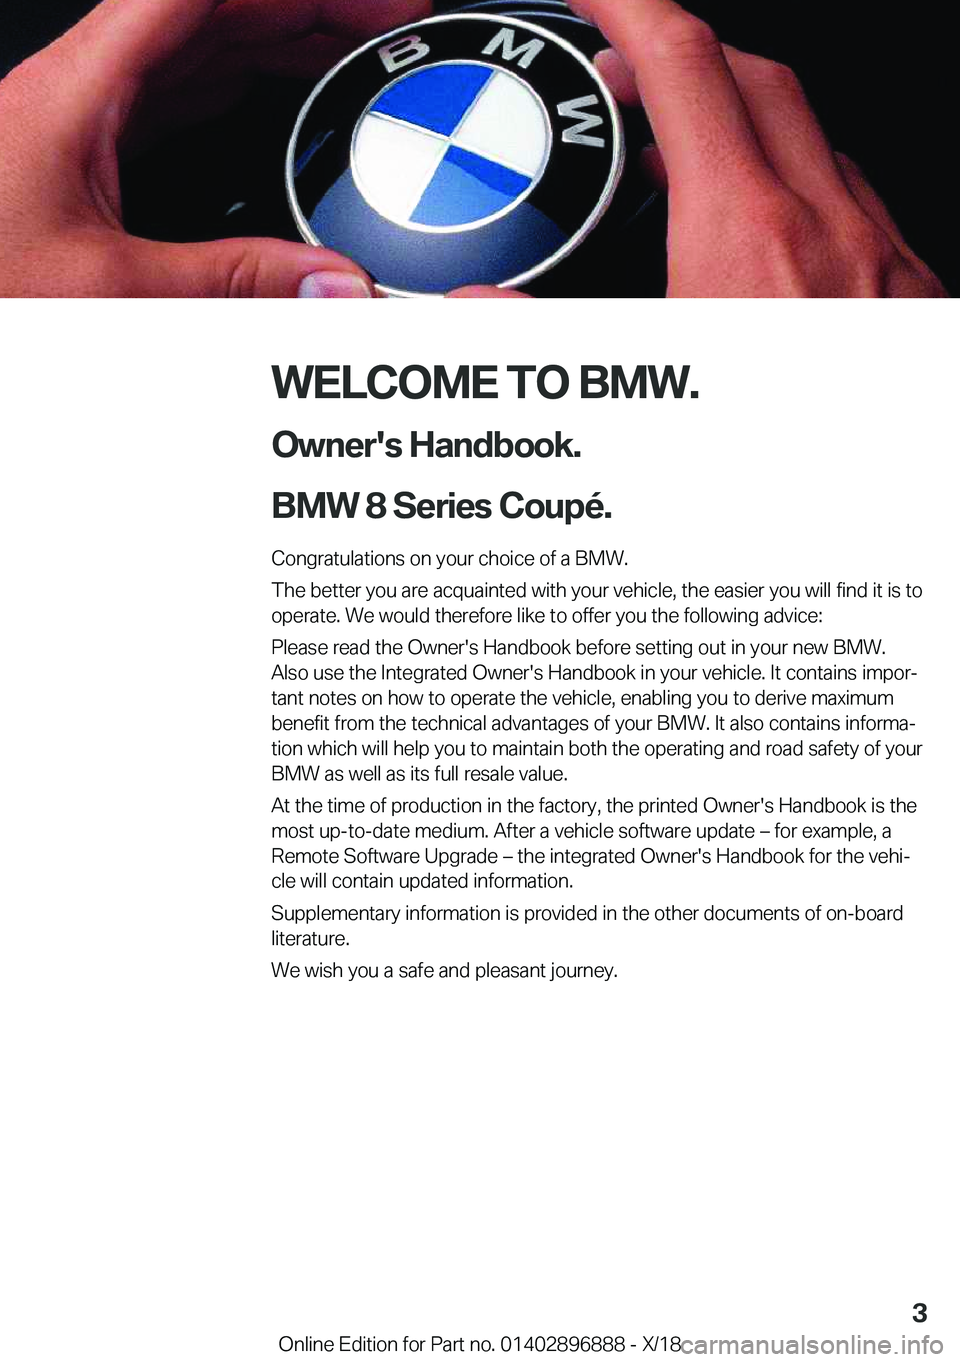 BMW 8 SERIES COUPE 2019  Owners Manual �W�E�L�C�O�M�E��T�O��B�M�W�.�O�w�n�e�r�'�s��H�a�n�d�b�o�o�k�.
�B�M�W��8��S�e�r�i�e�s��C�o�u�p�